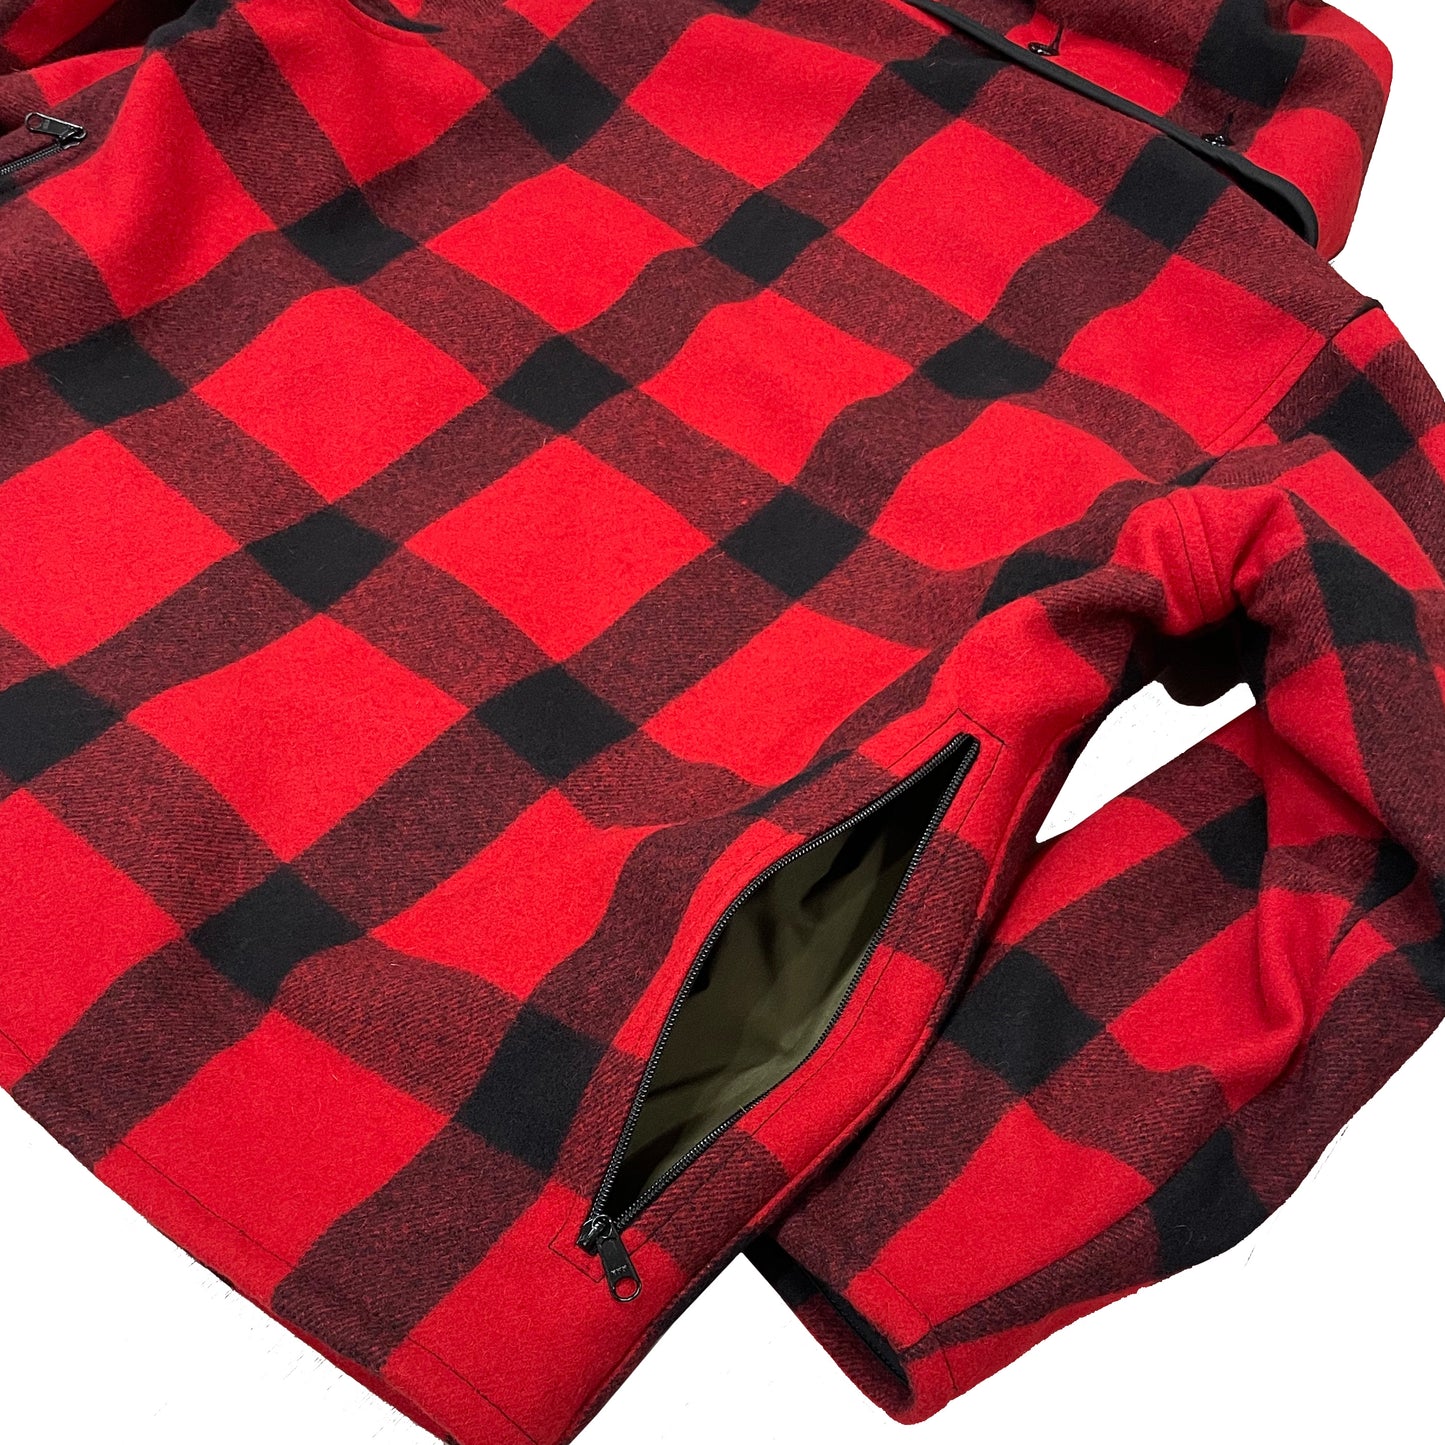 AZ 25 wool mackinaw coat back pocket detail, red and black plaid